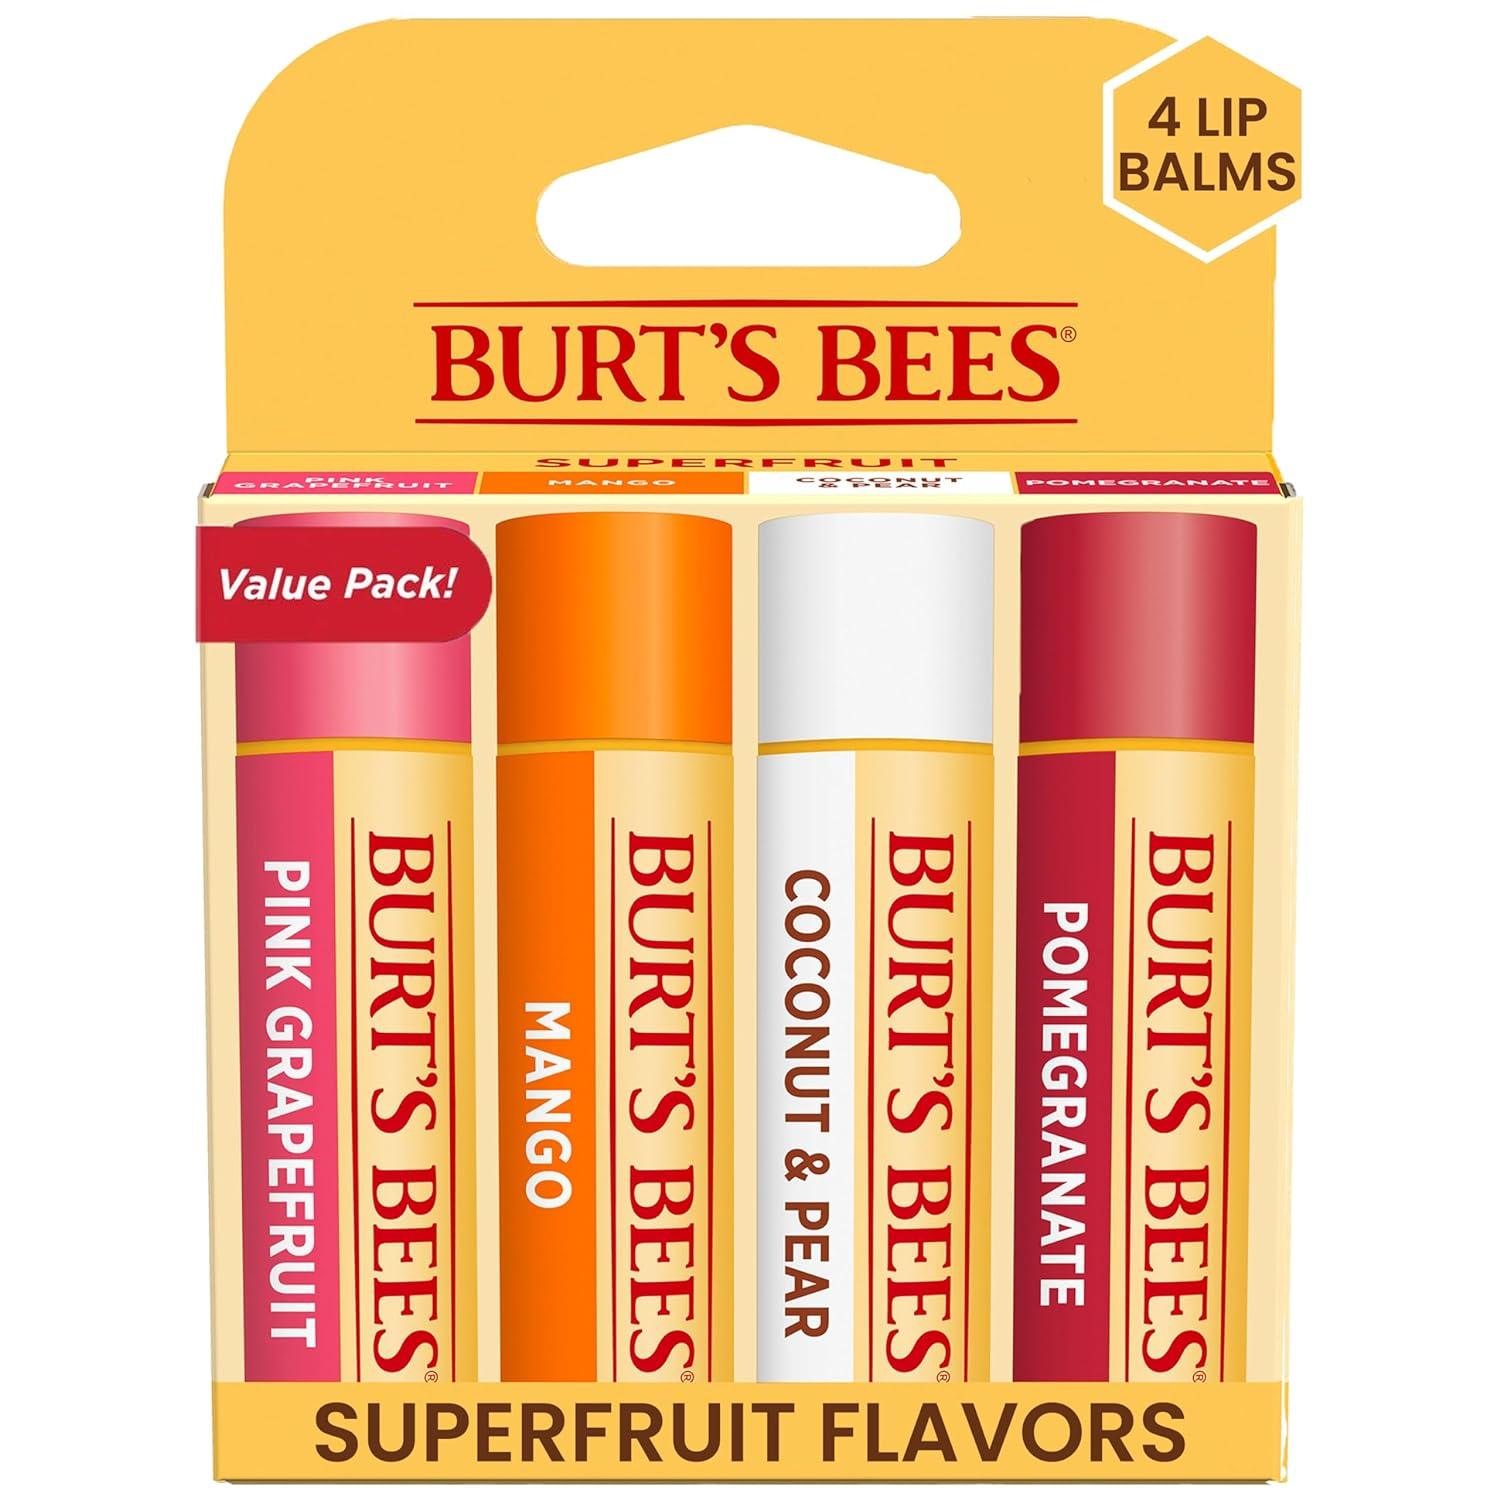 Burt's Bees Baumes à Lèvres de Superfruits - Pack de 4 - mondialpharma.com